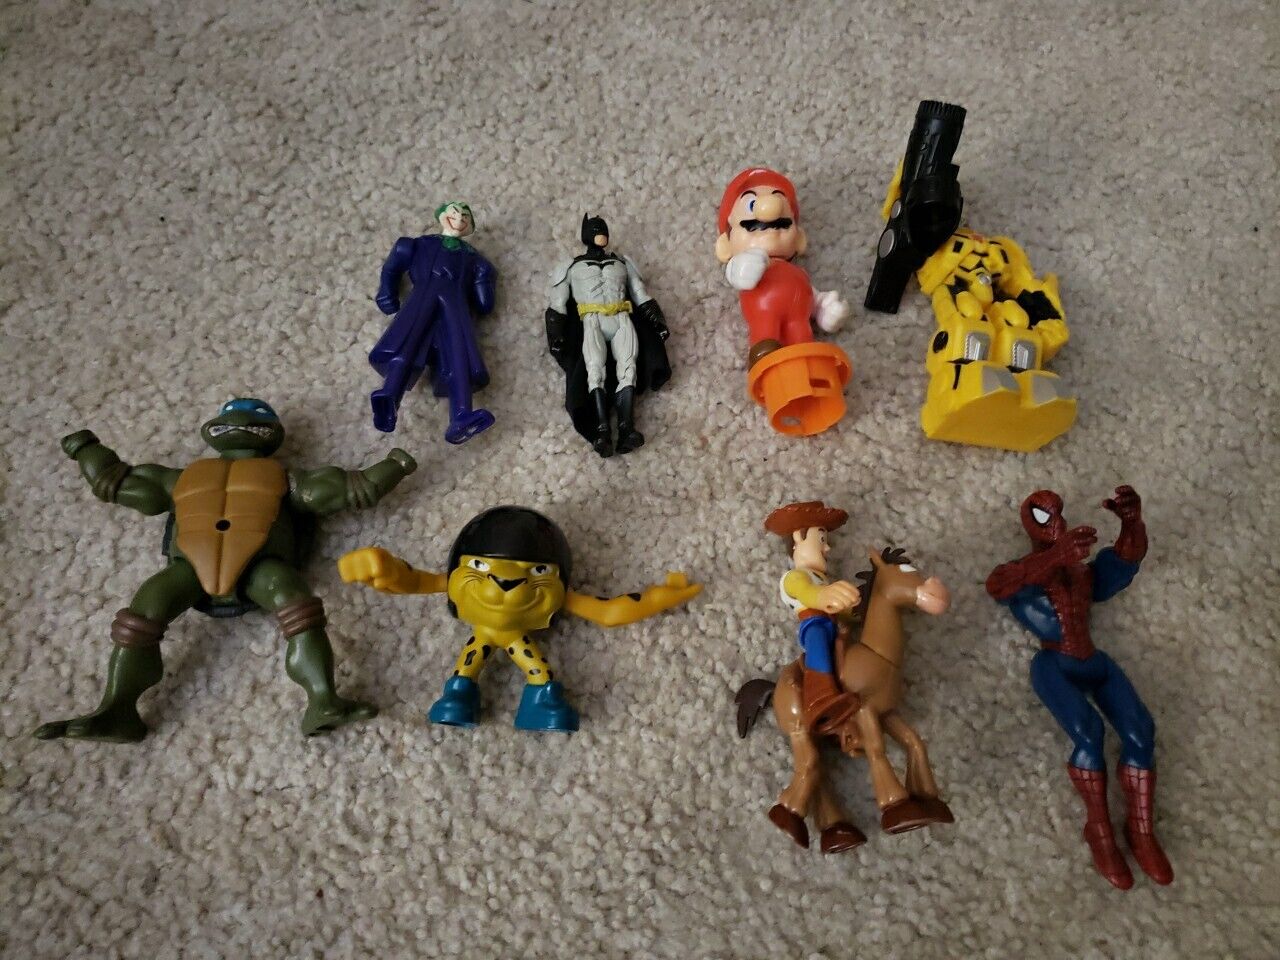 Mixed Lot of Various Action Figures - Batman, Joker, Mario, Spider-Man, Leonardo